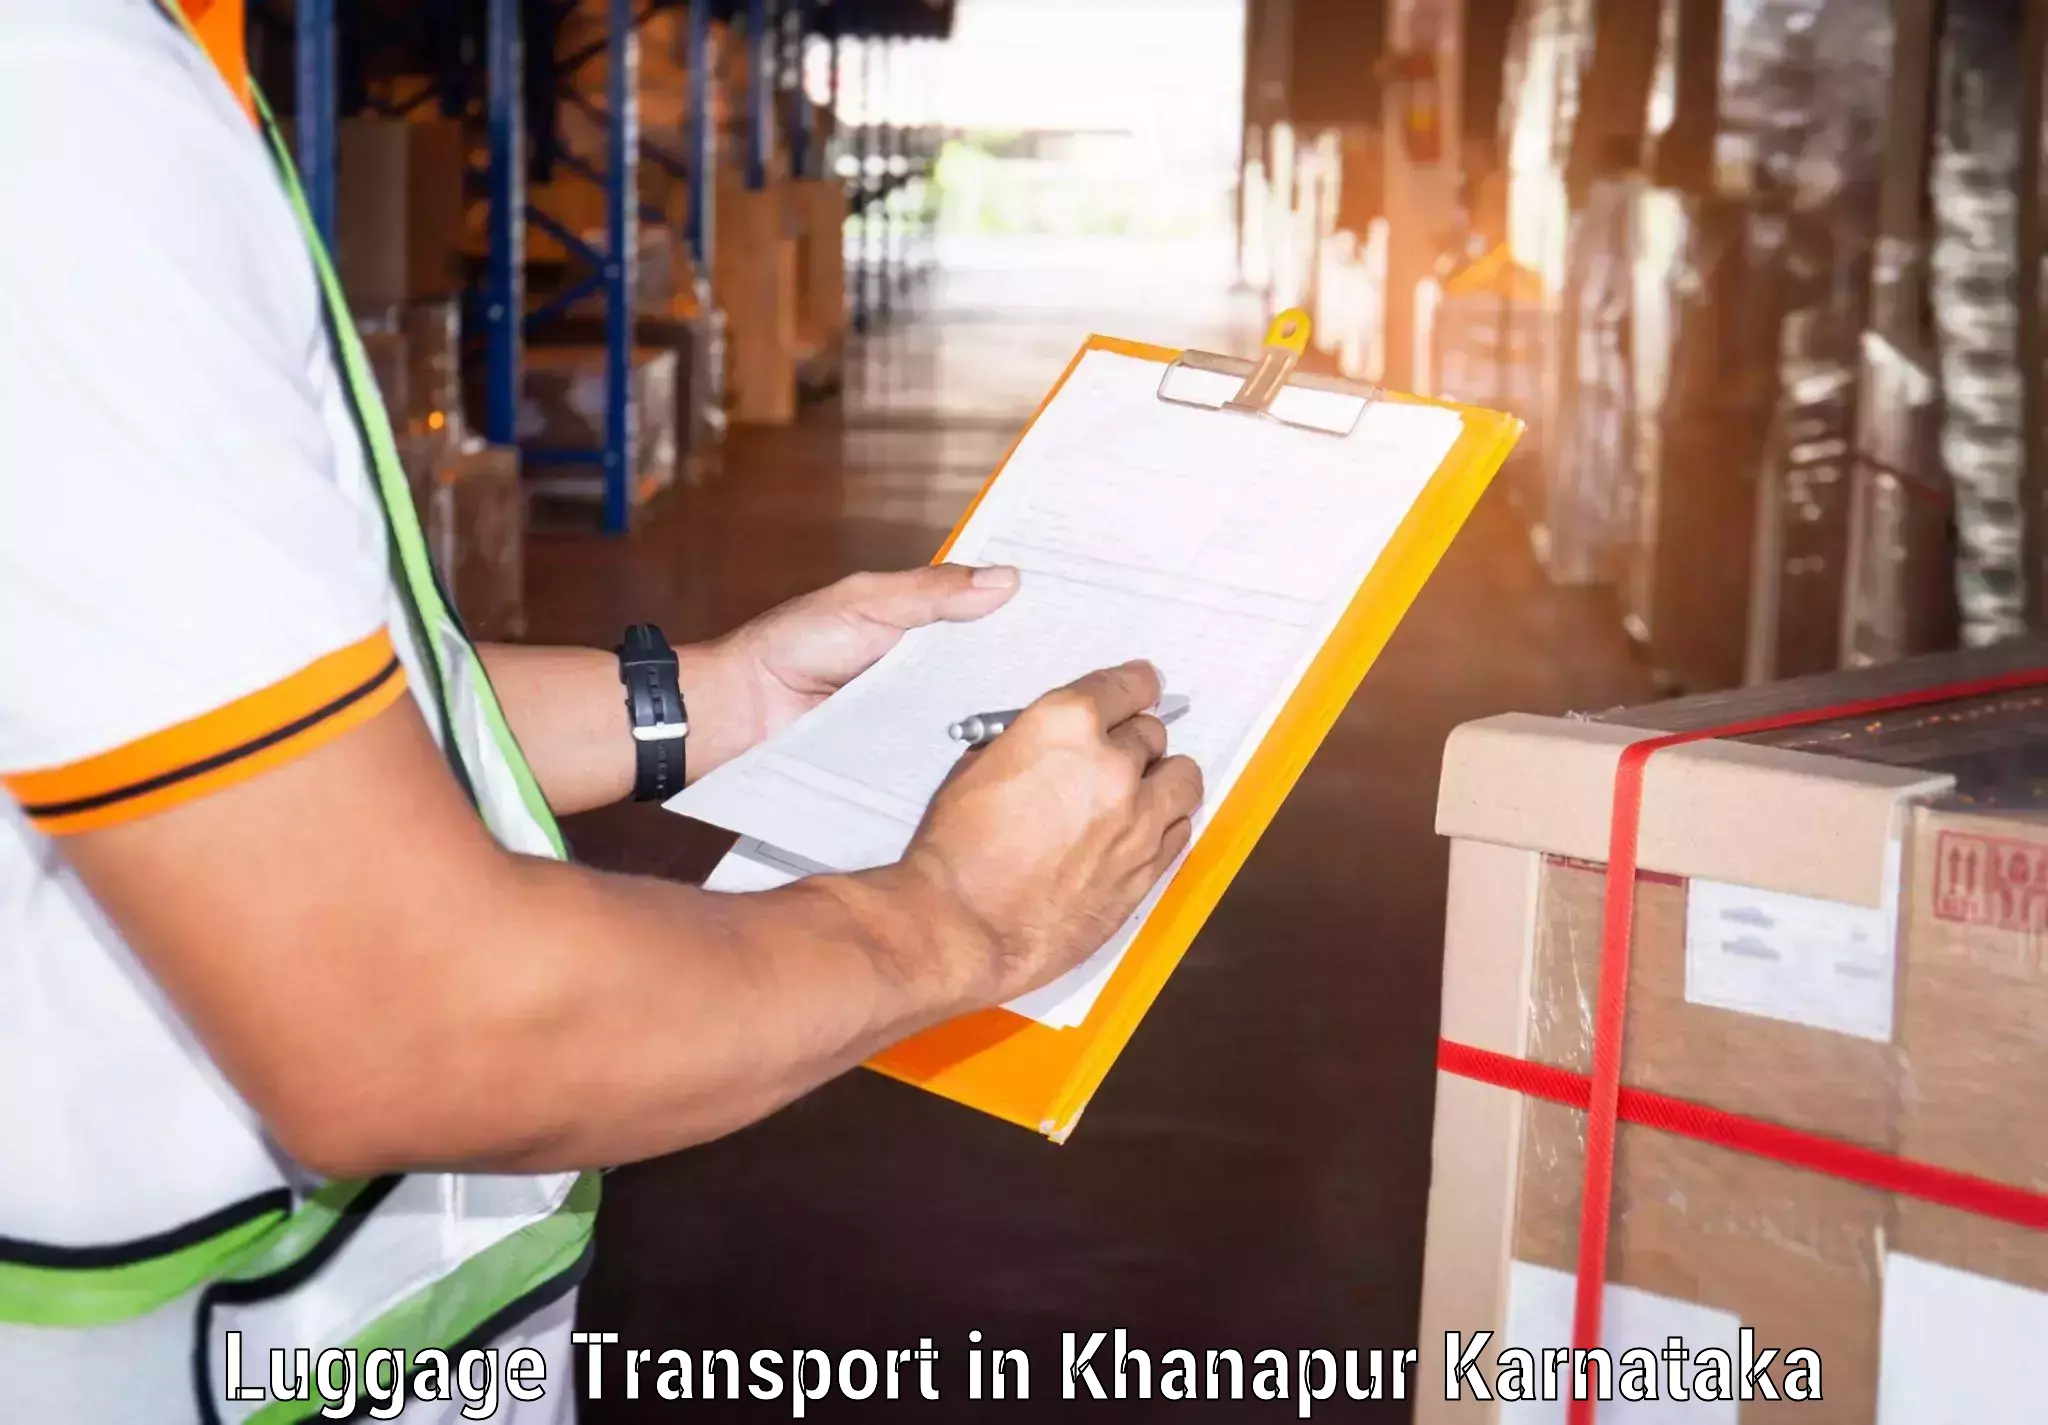 Luggage delivery operations in Khanapur Karnataka